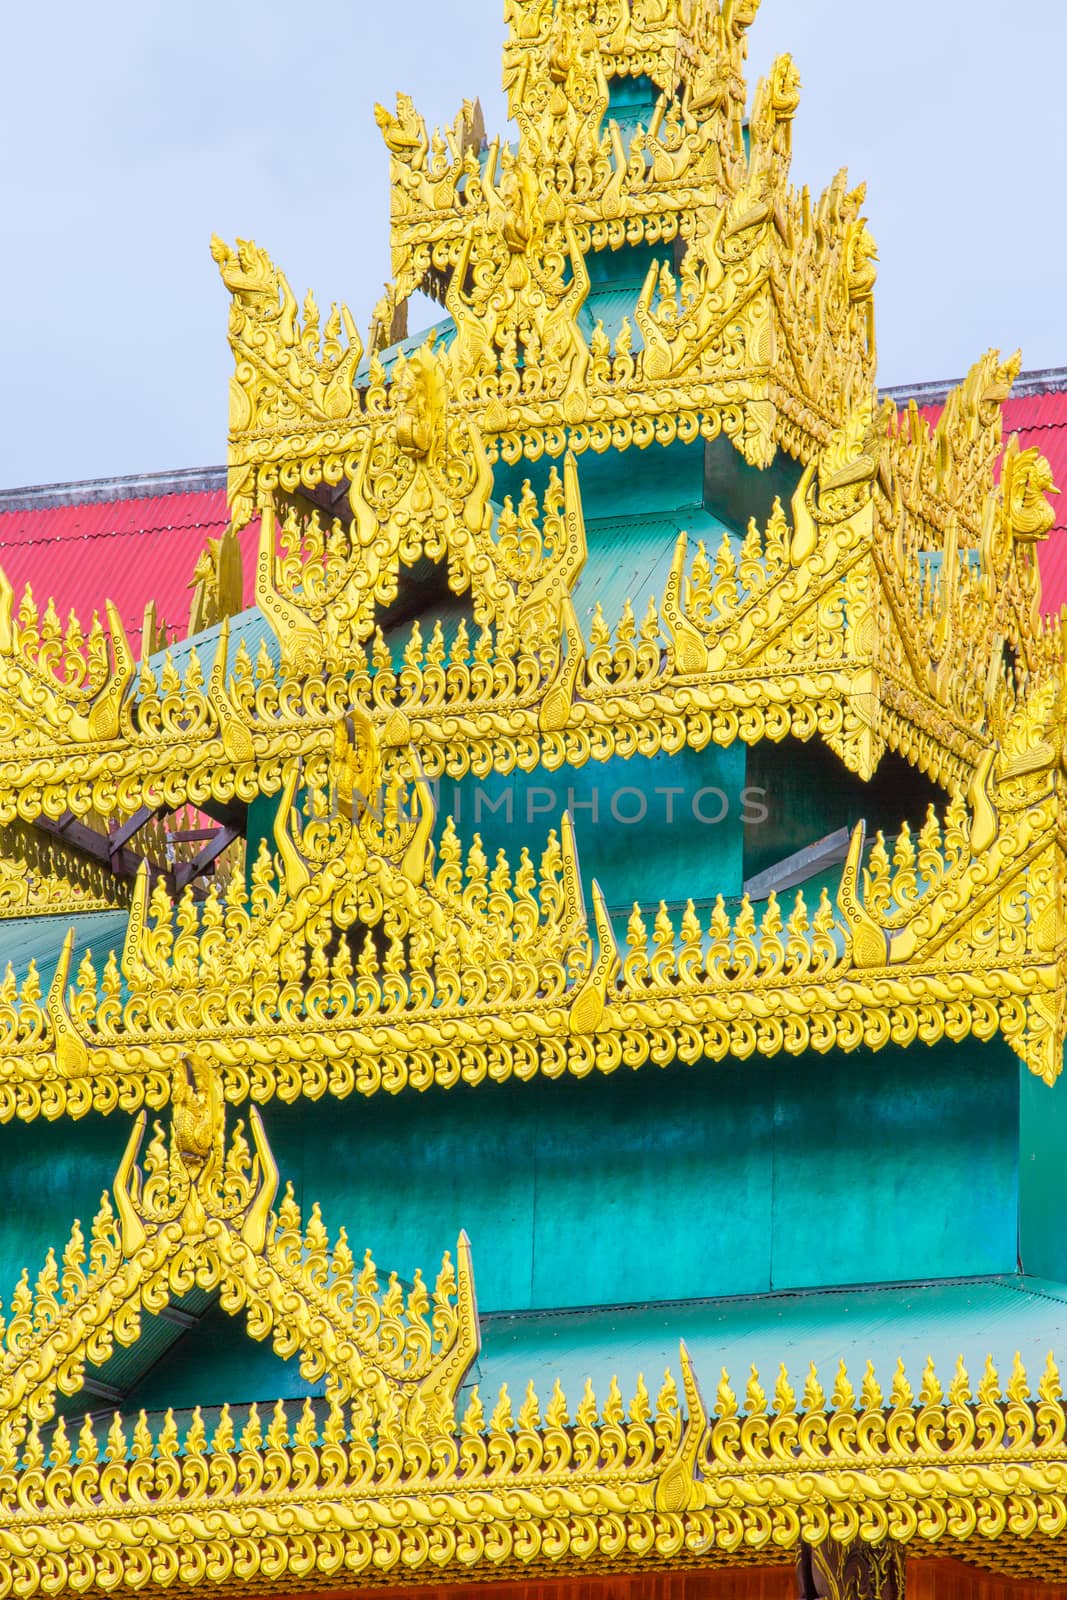 Burmese temple by tuchkay